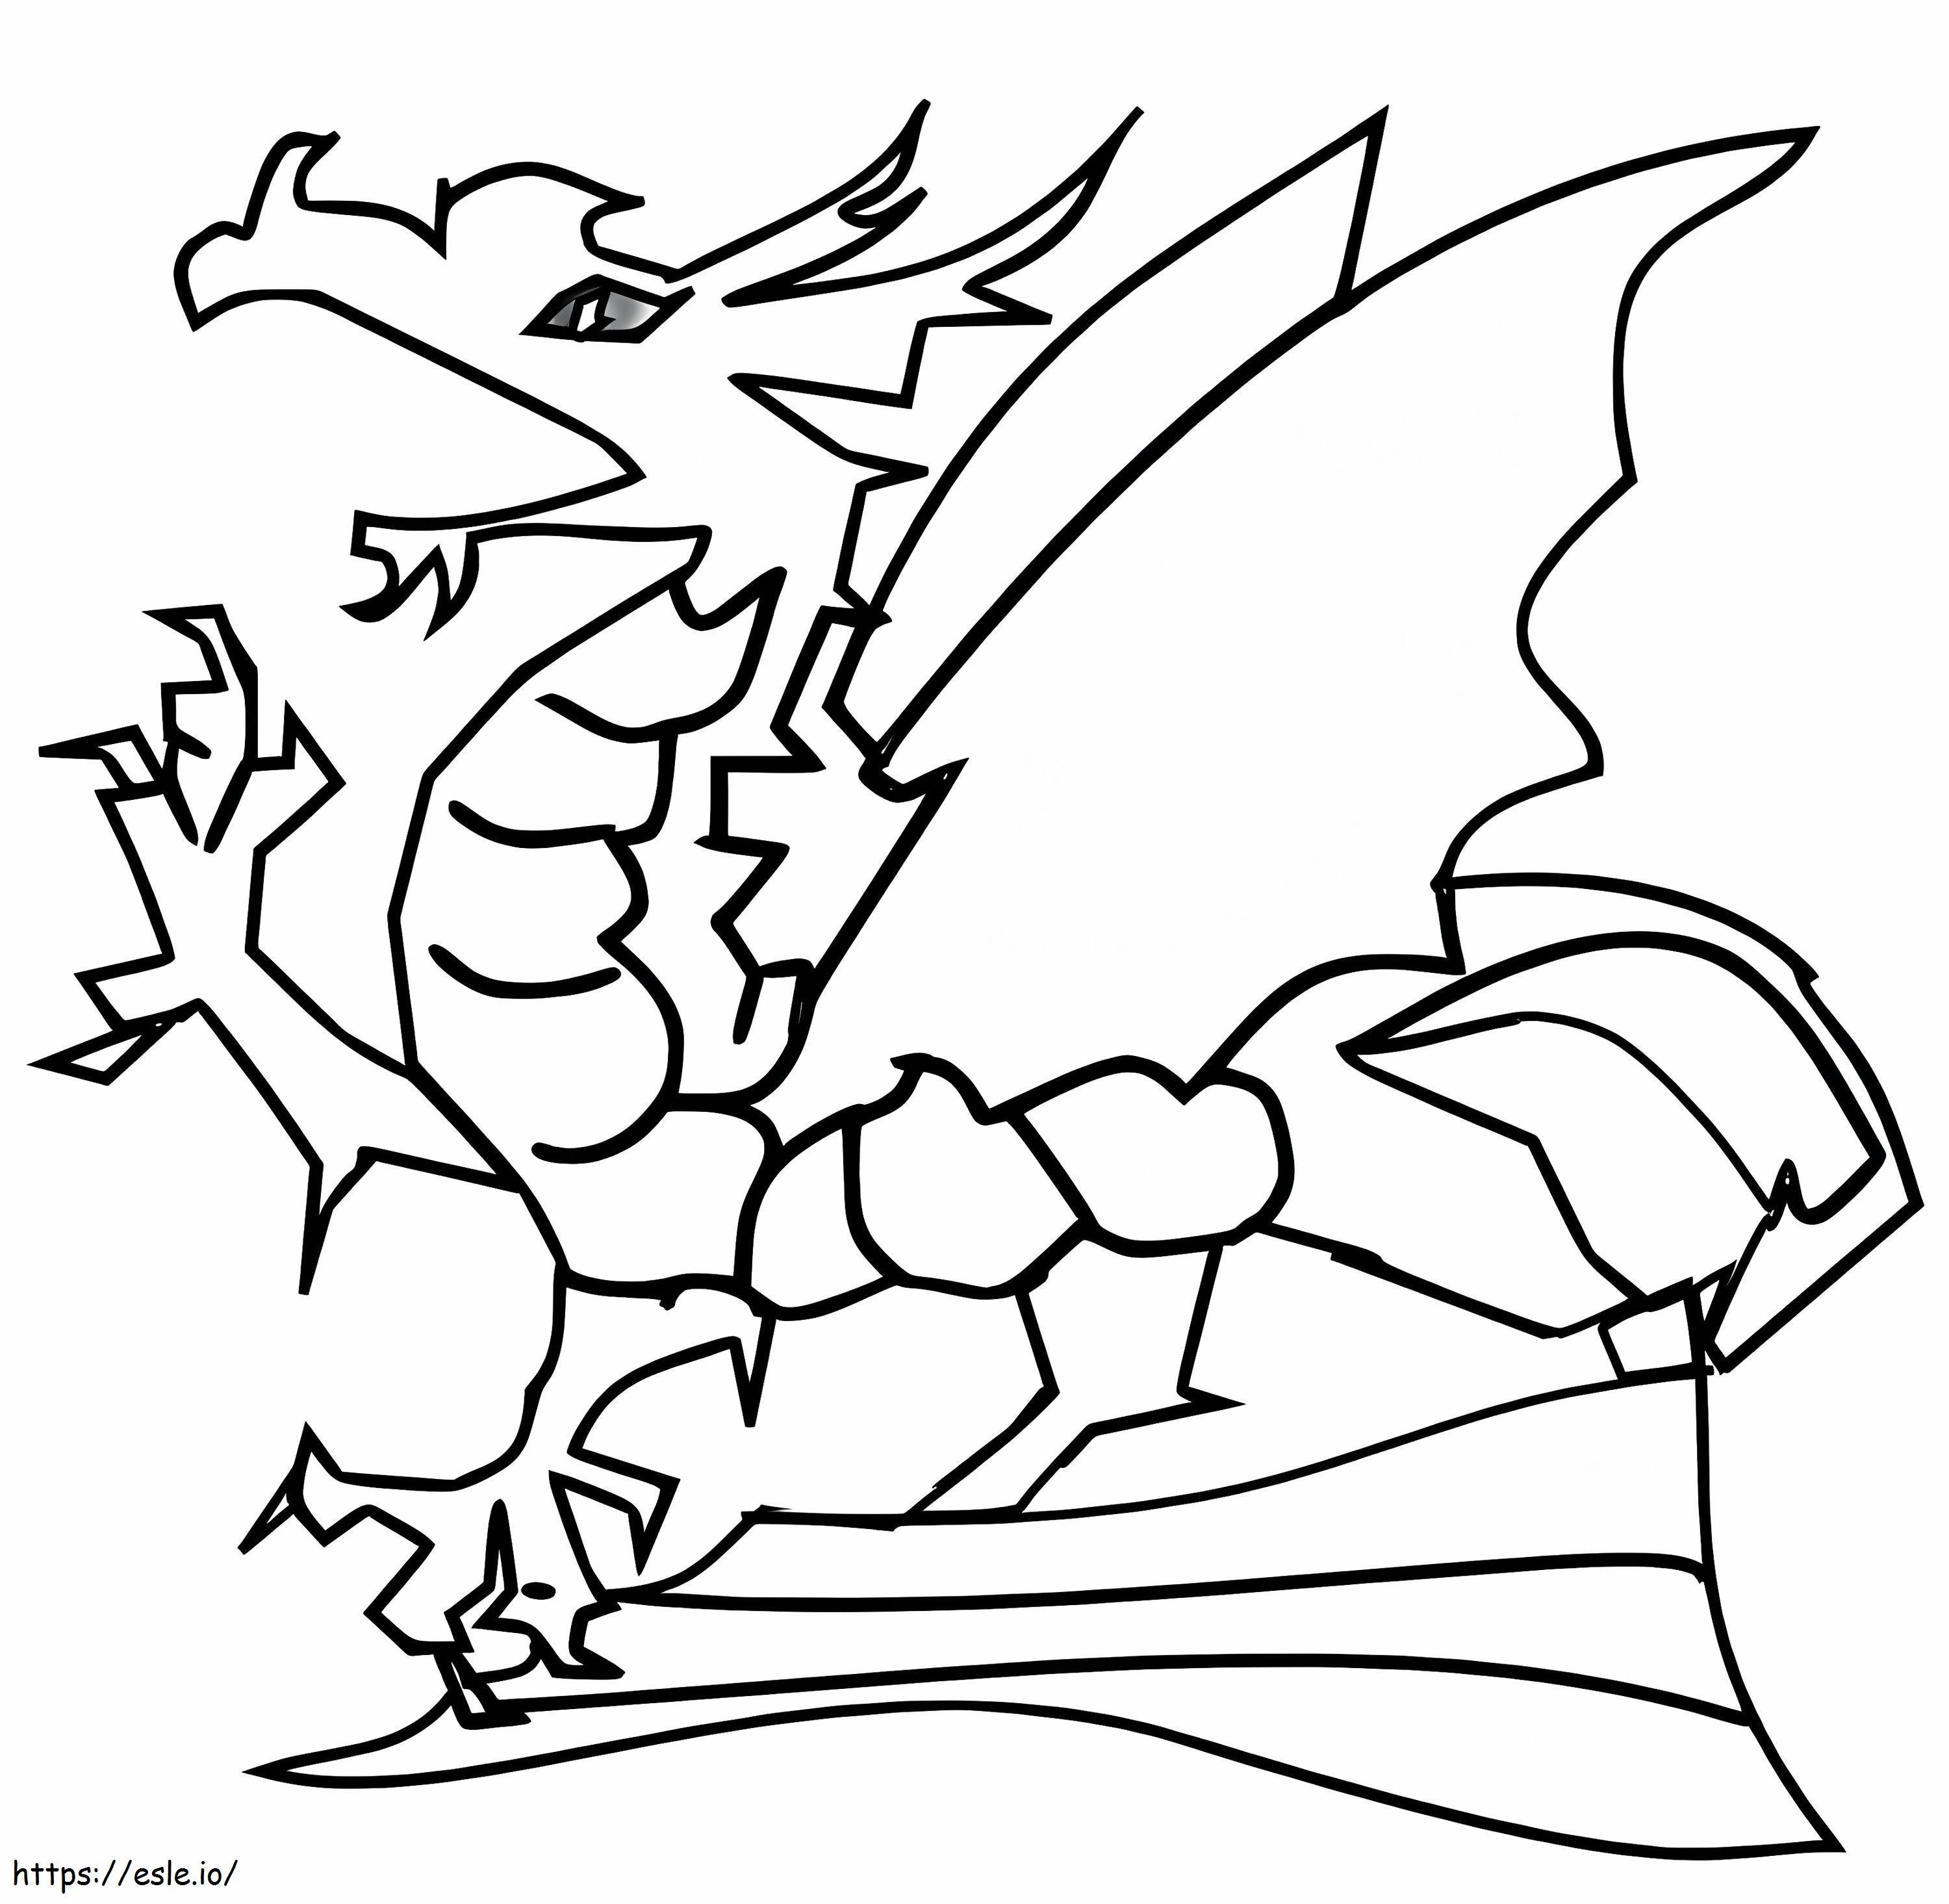 Coloriage Dragon facile à imprimer dessin